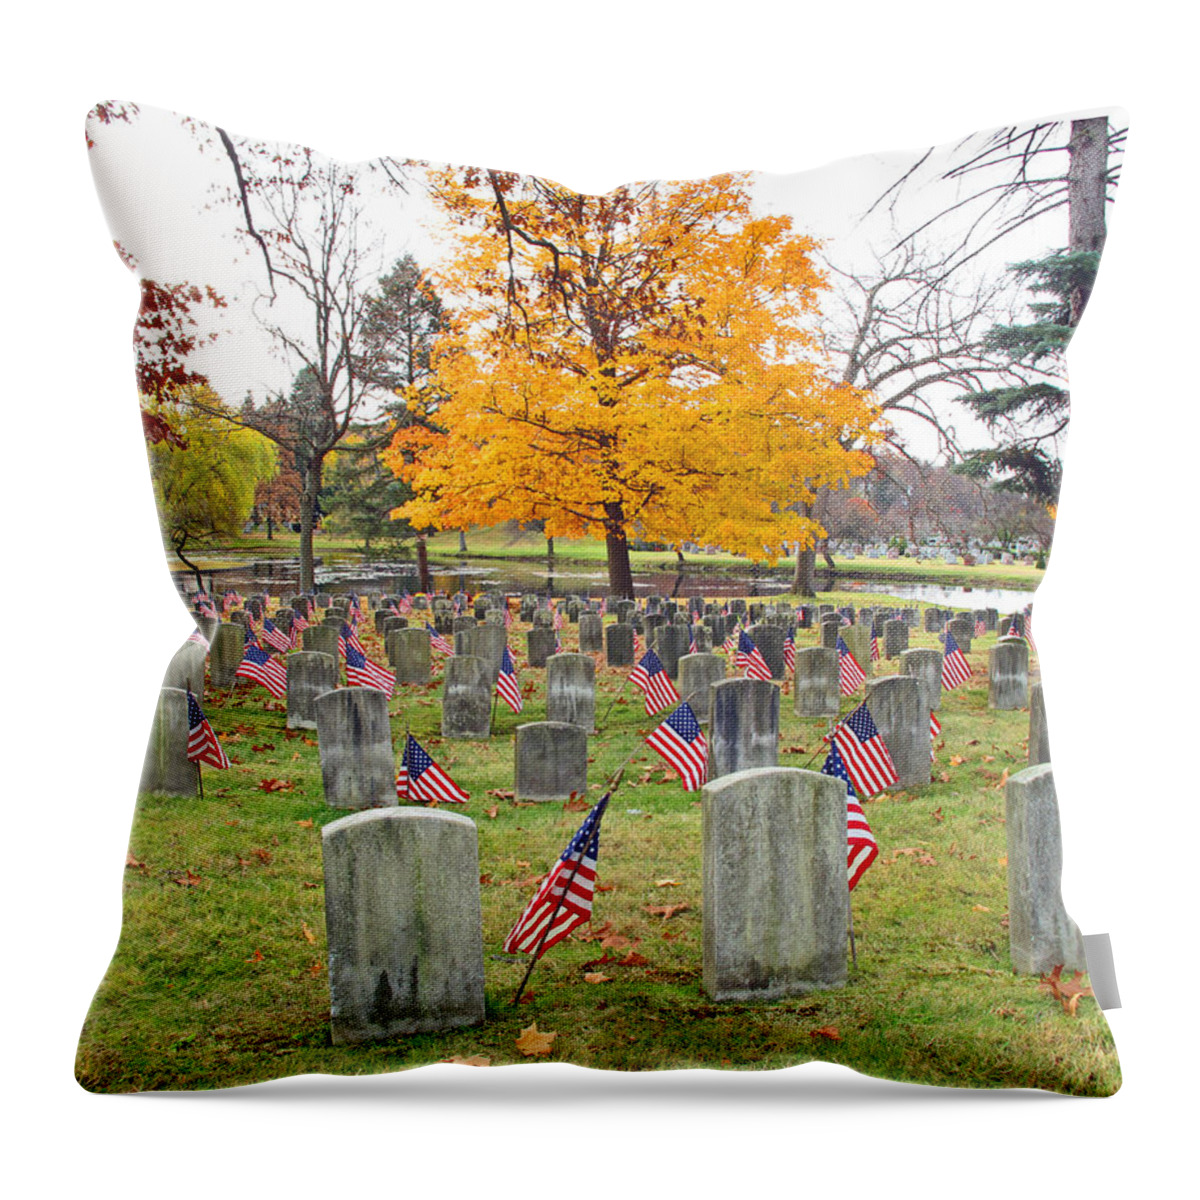 Veterans Throw Pillow featuring the photograph Veterans Day by Barbara McDevitt